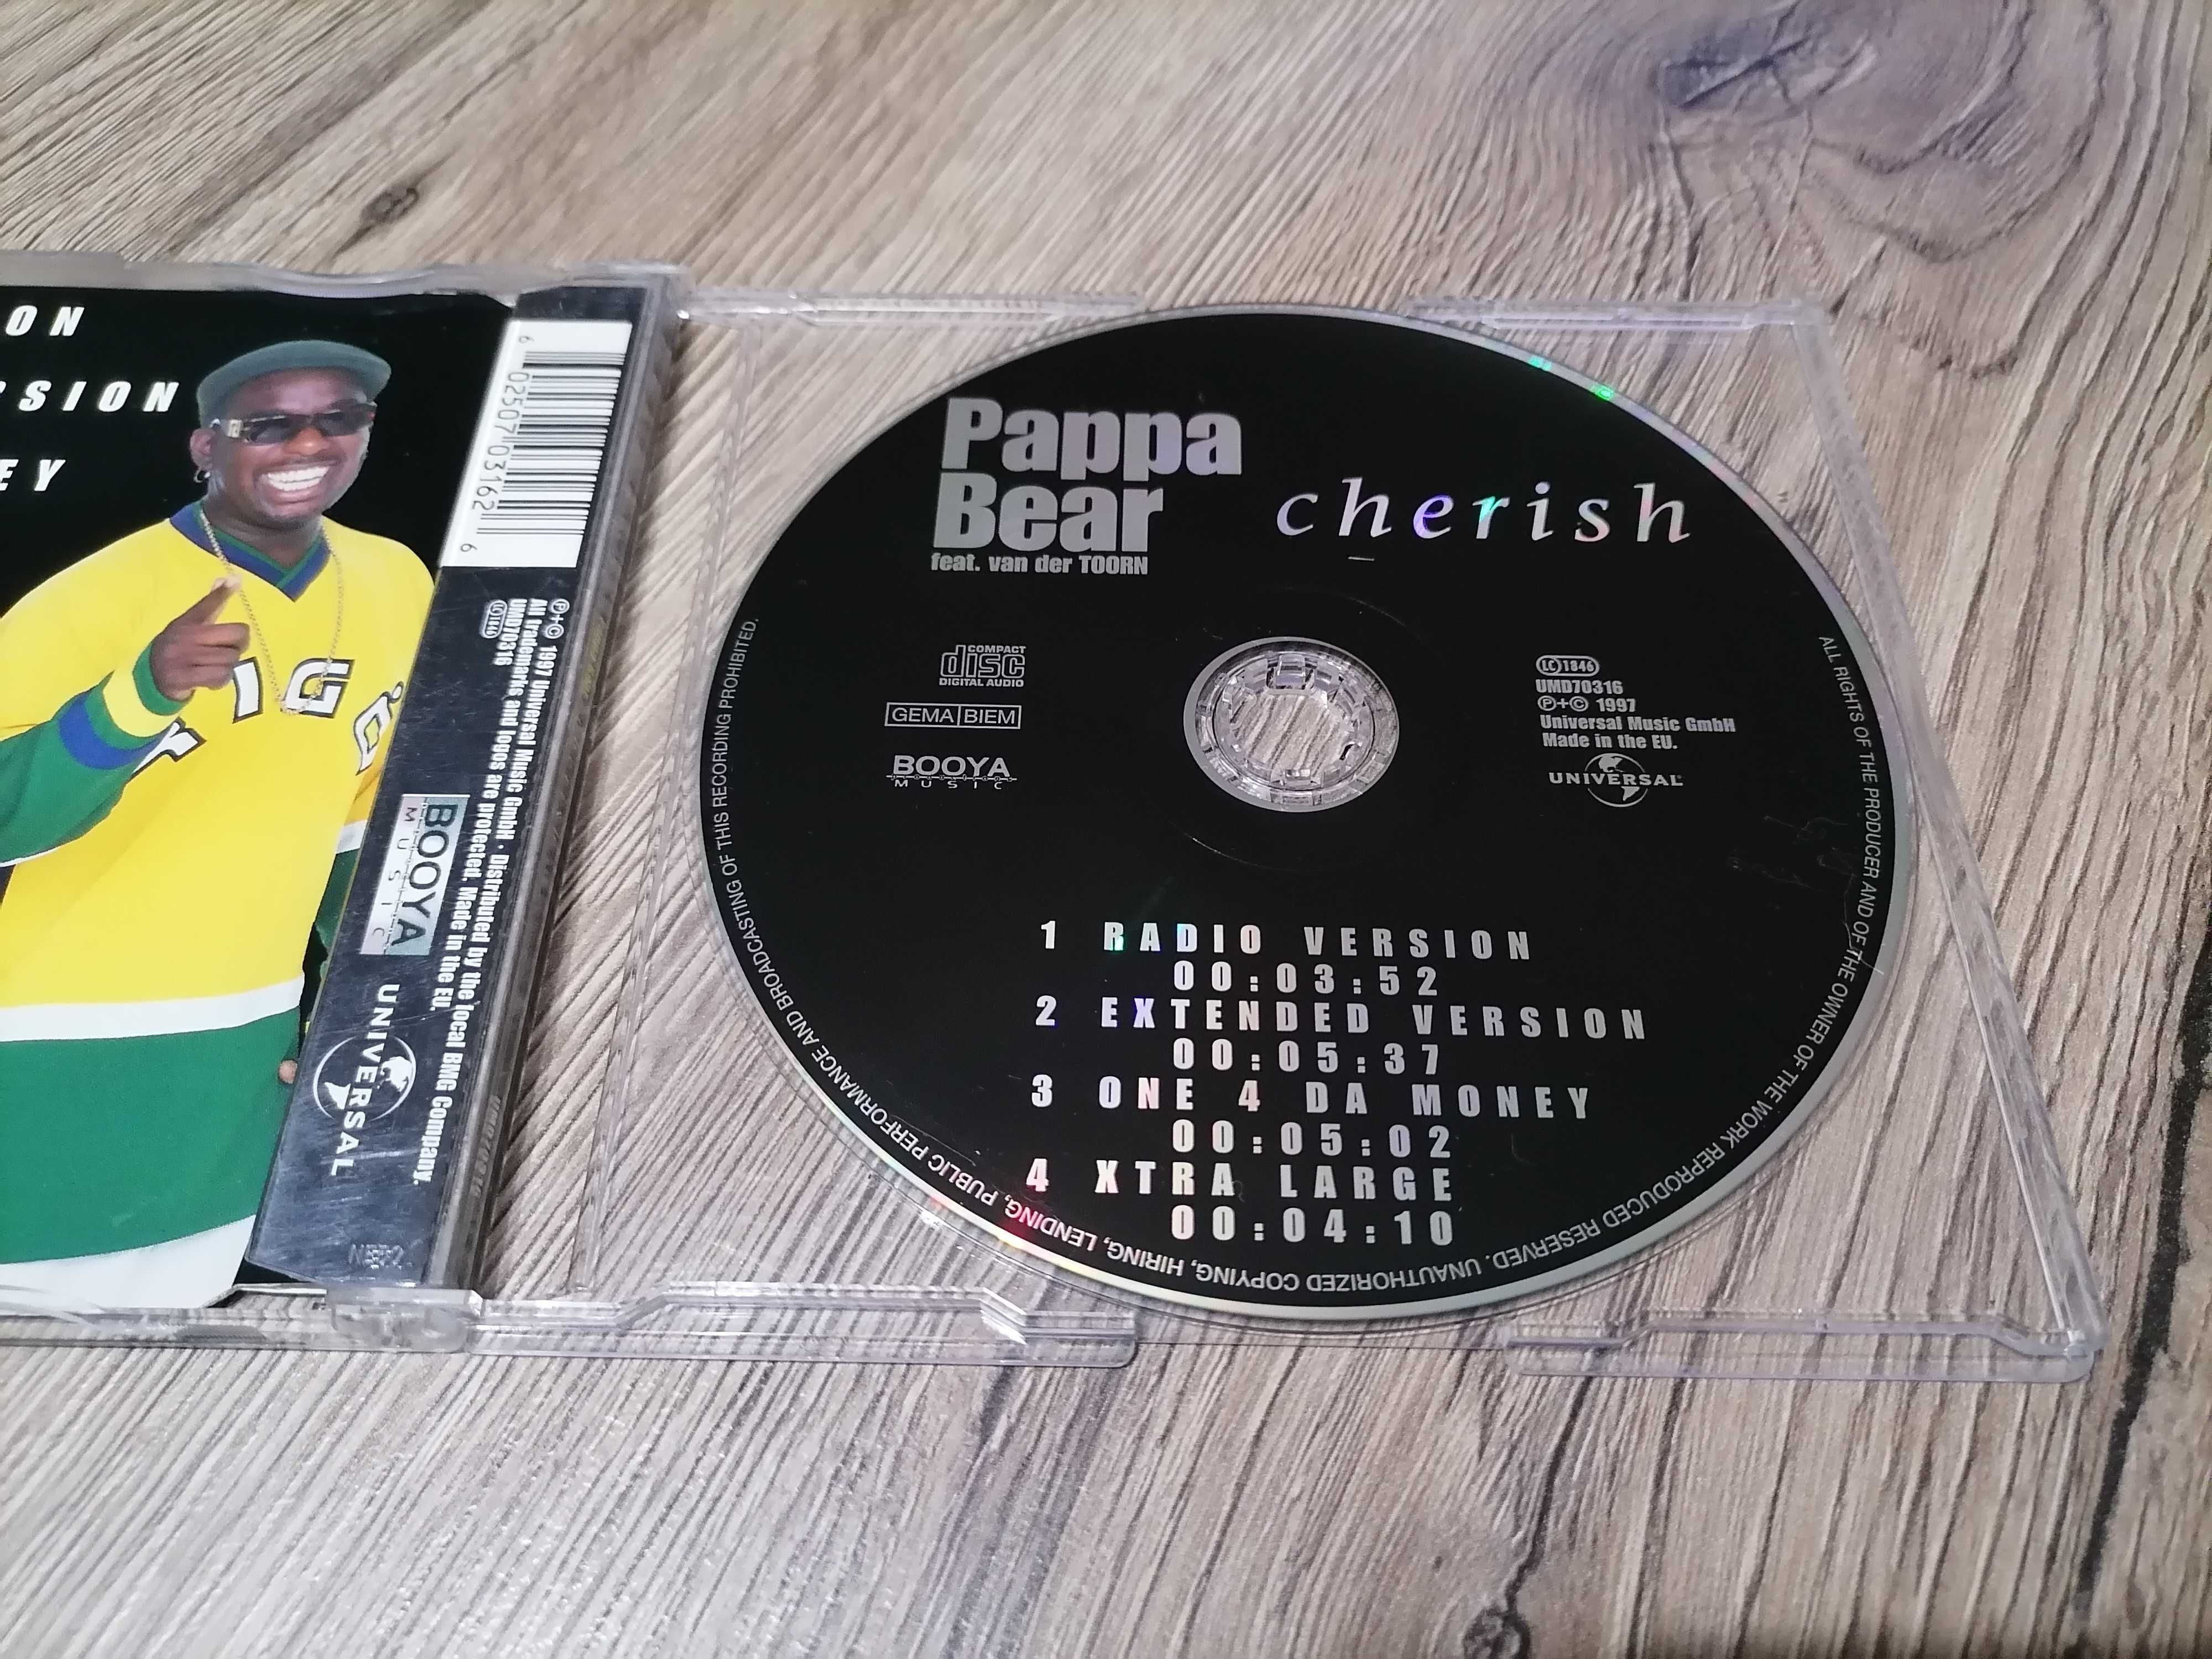 Pappa Bear Feat. van der Toorn – Cherish CD